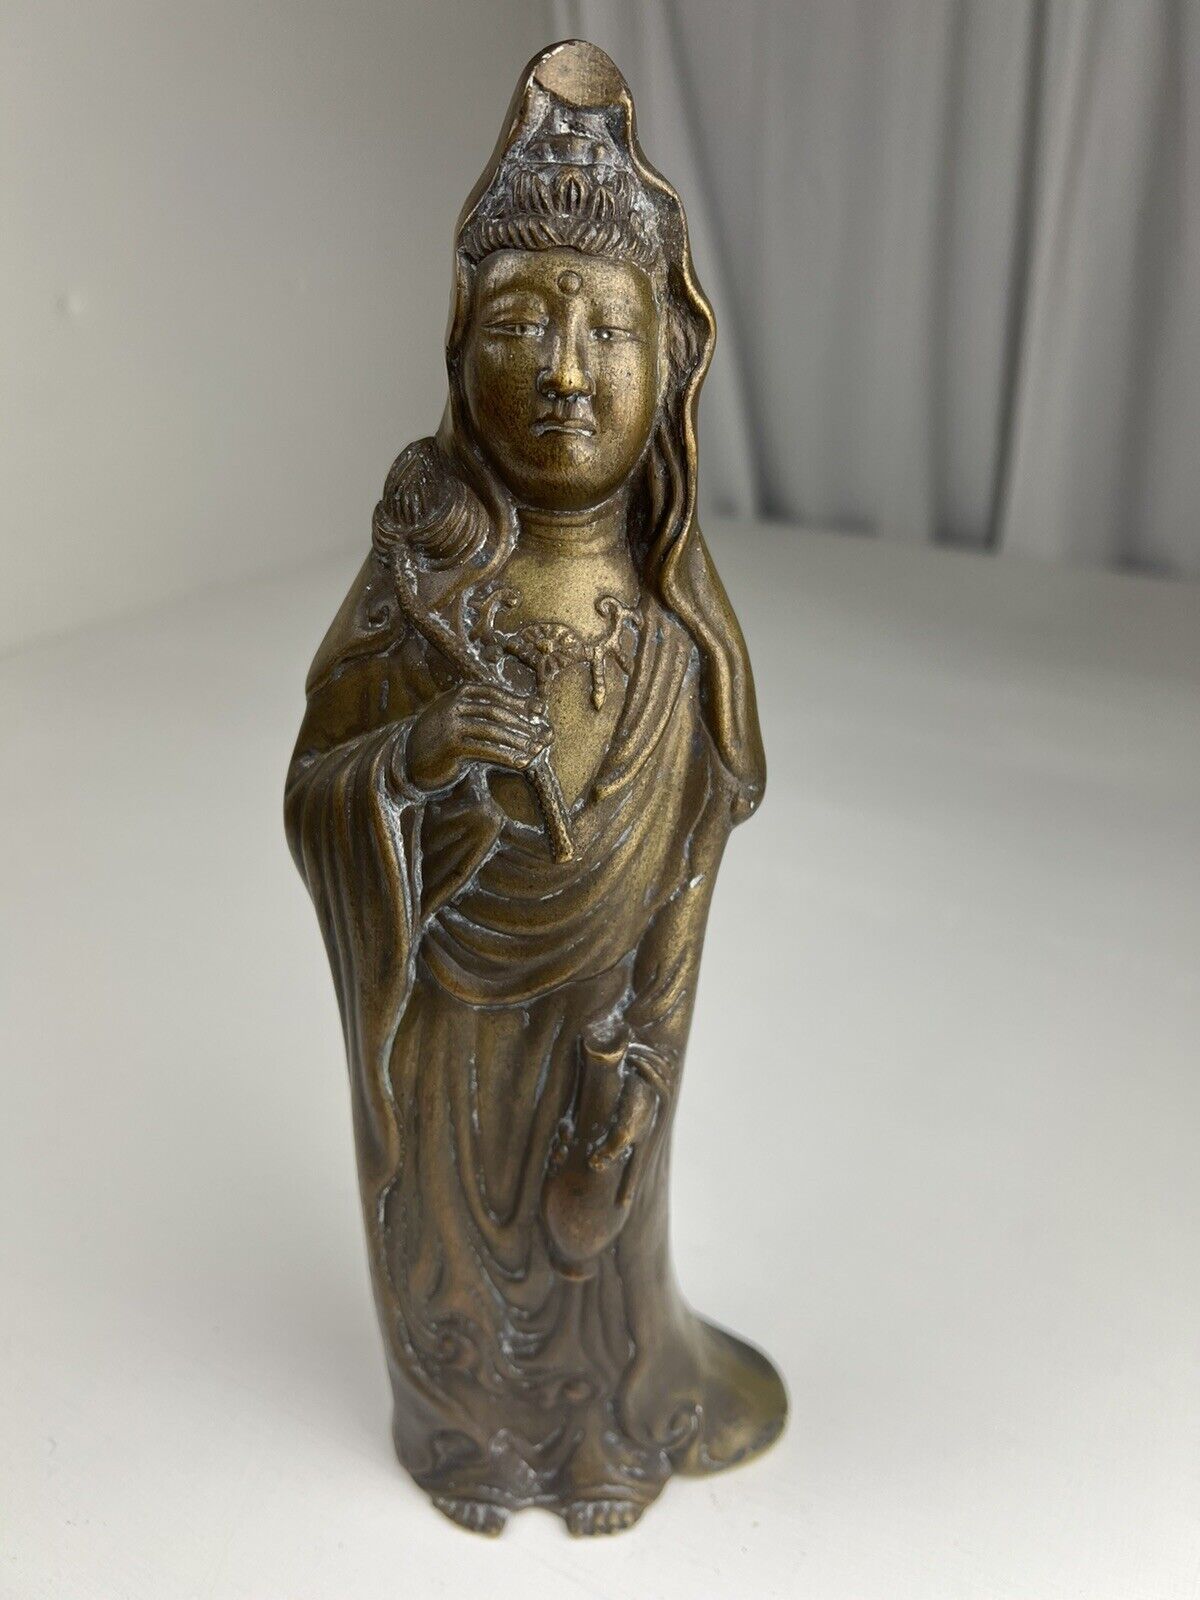 11” Solid Brass Asian Statue Guanyin Quan Yin Goddess of Mercy Ritual Water Vase